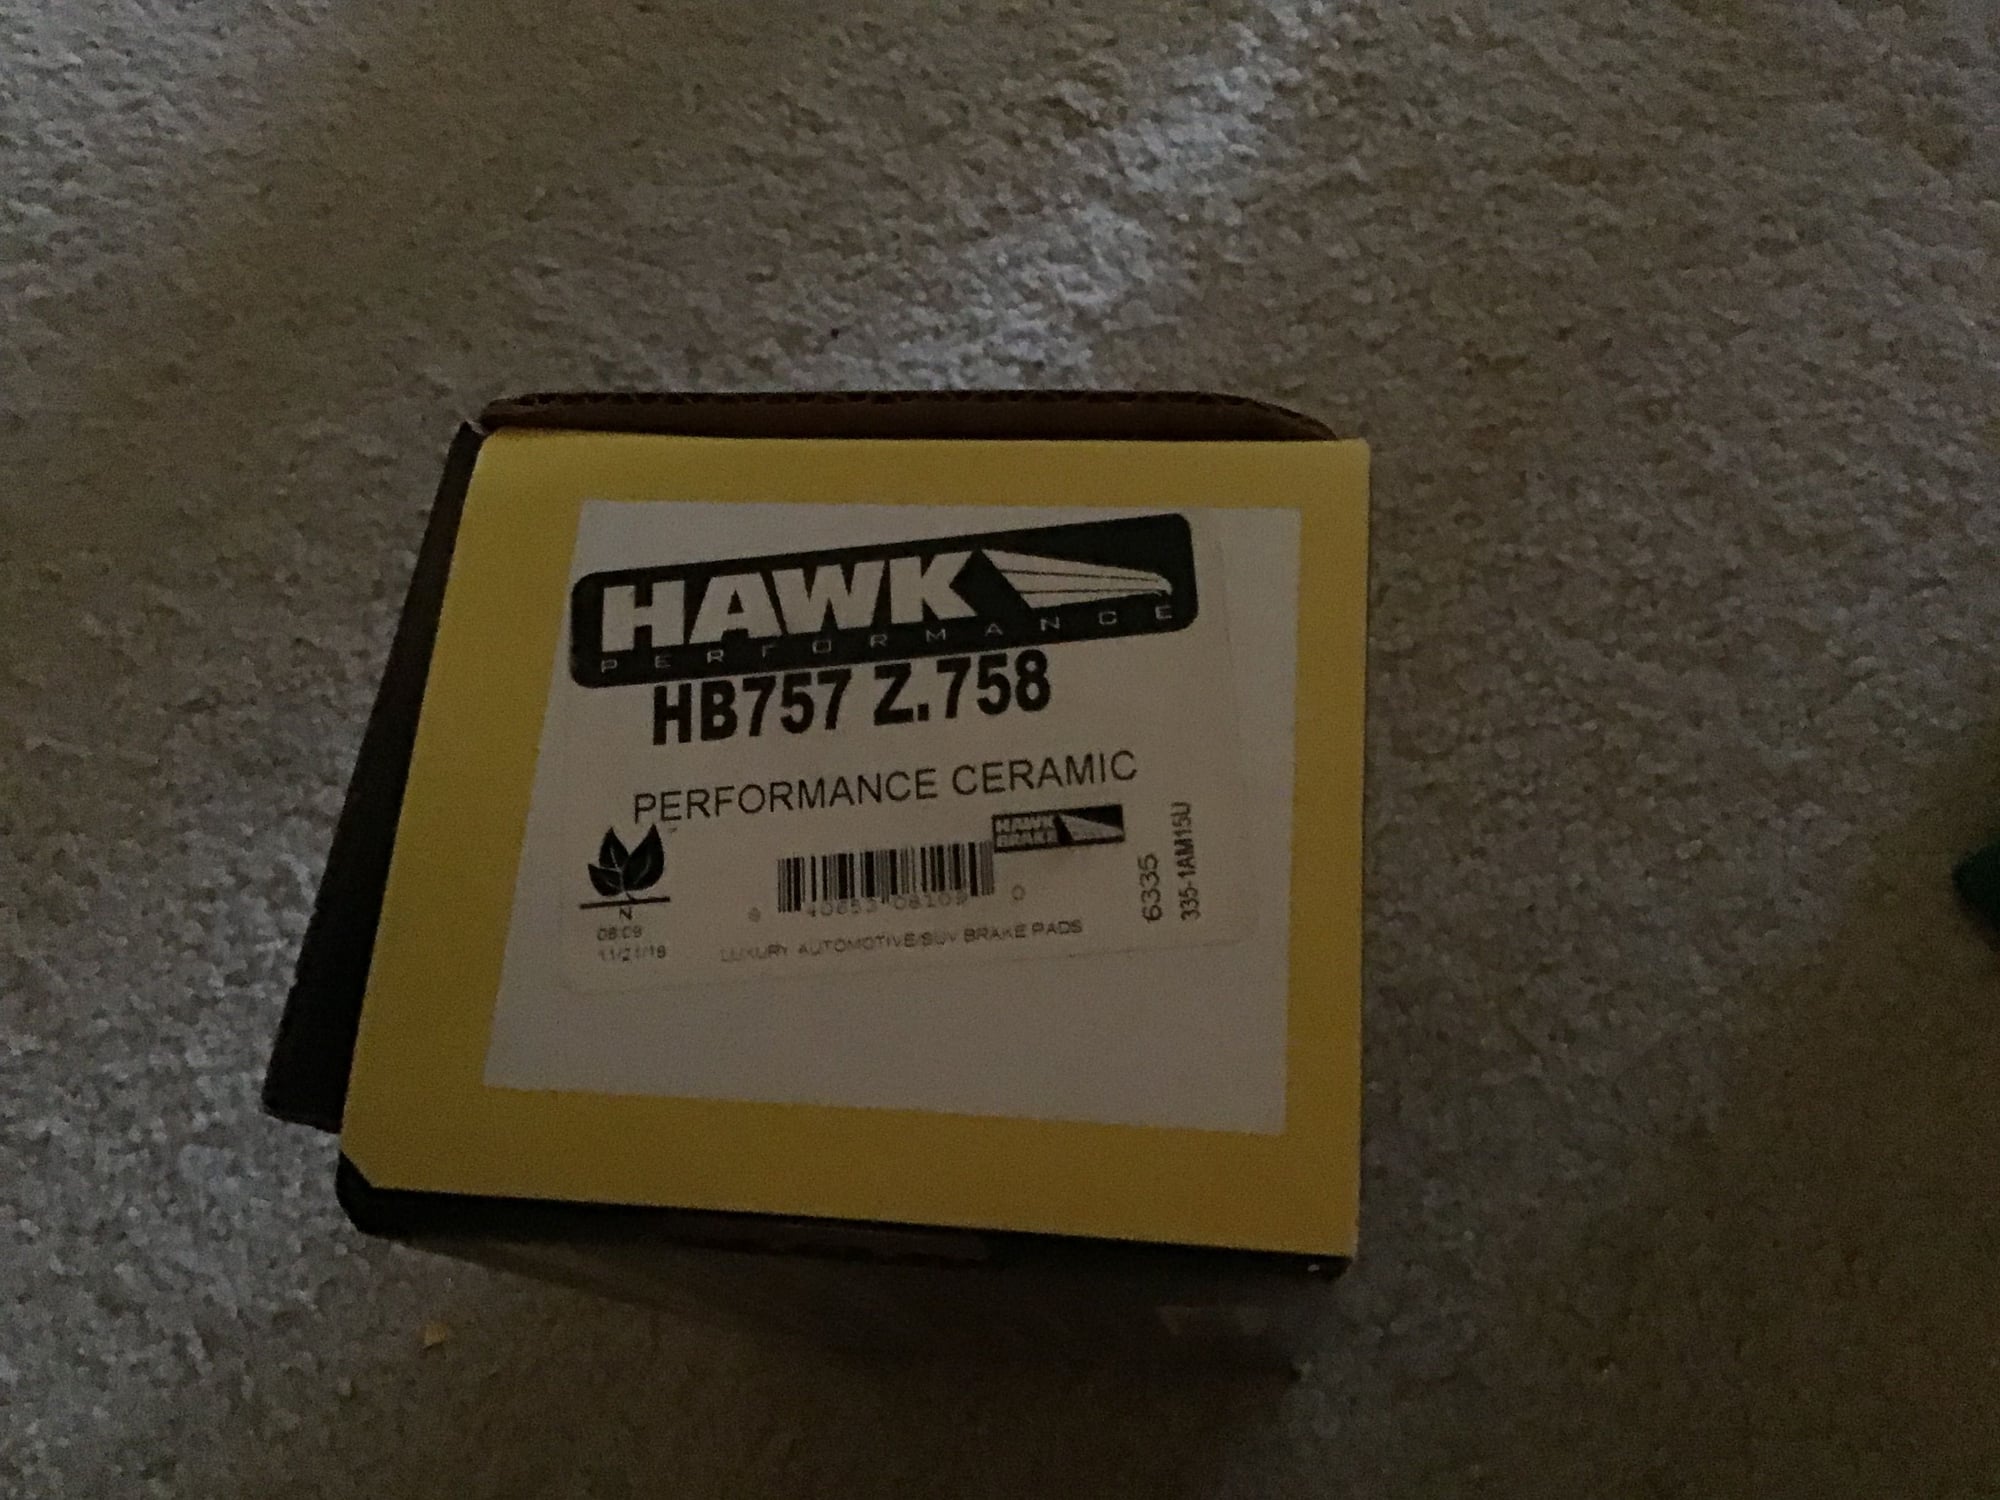 Brakes - Hawk Performance Ceramic Pads - New - Bellevue, WA 98004, United States